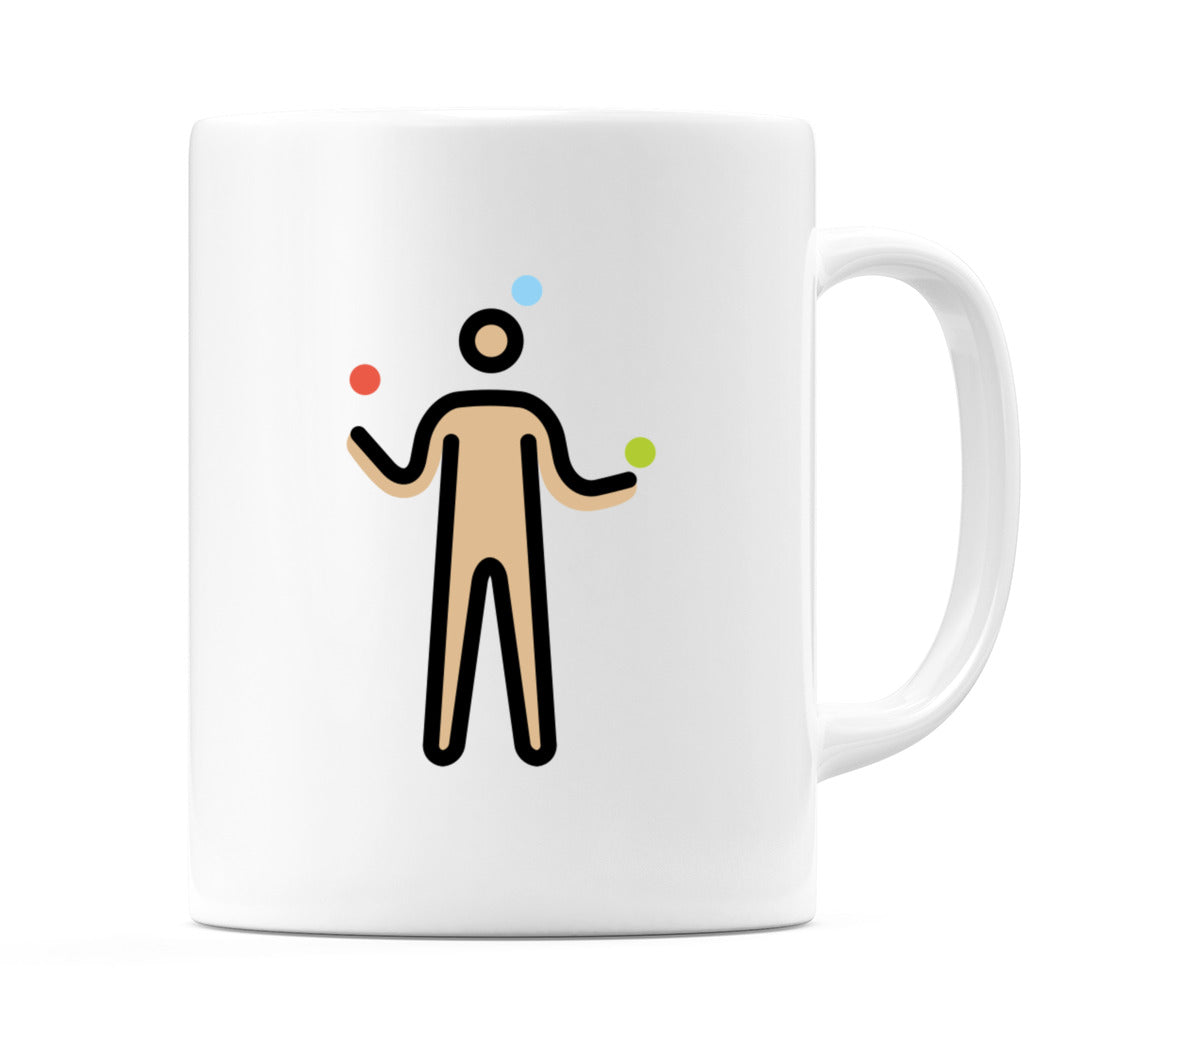 Male Juggling: Medium-Light Skin Tone Emoji Mug